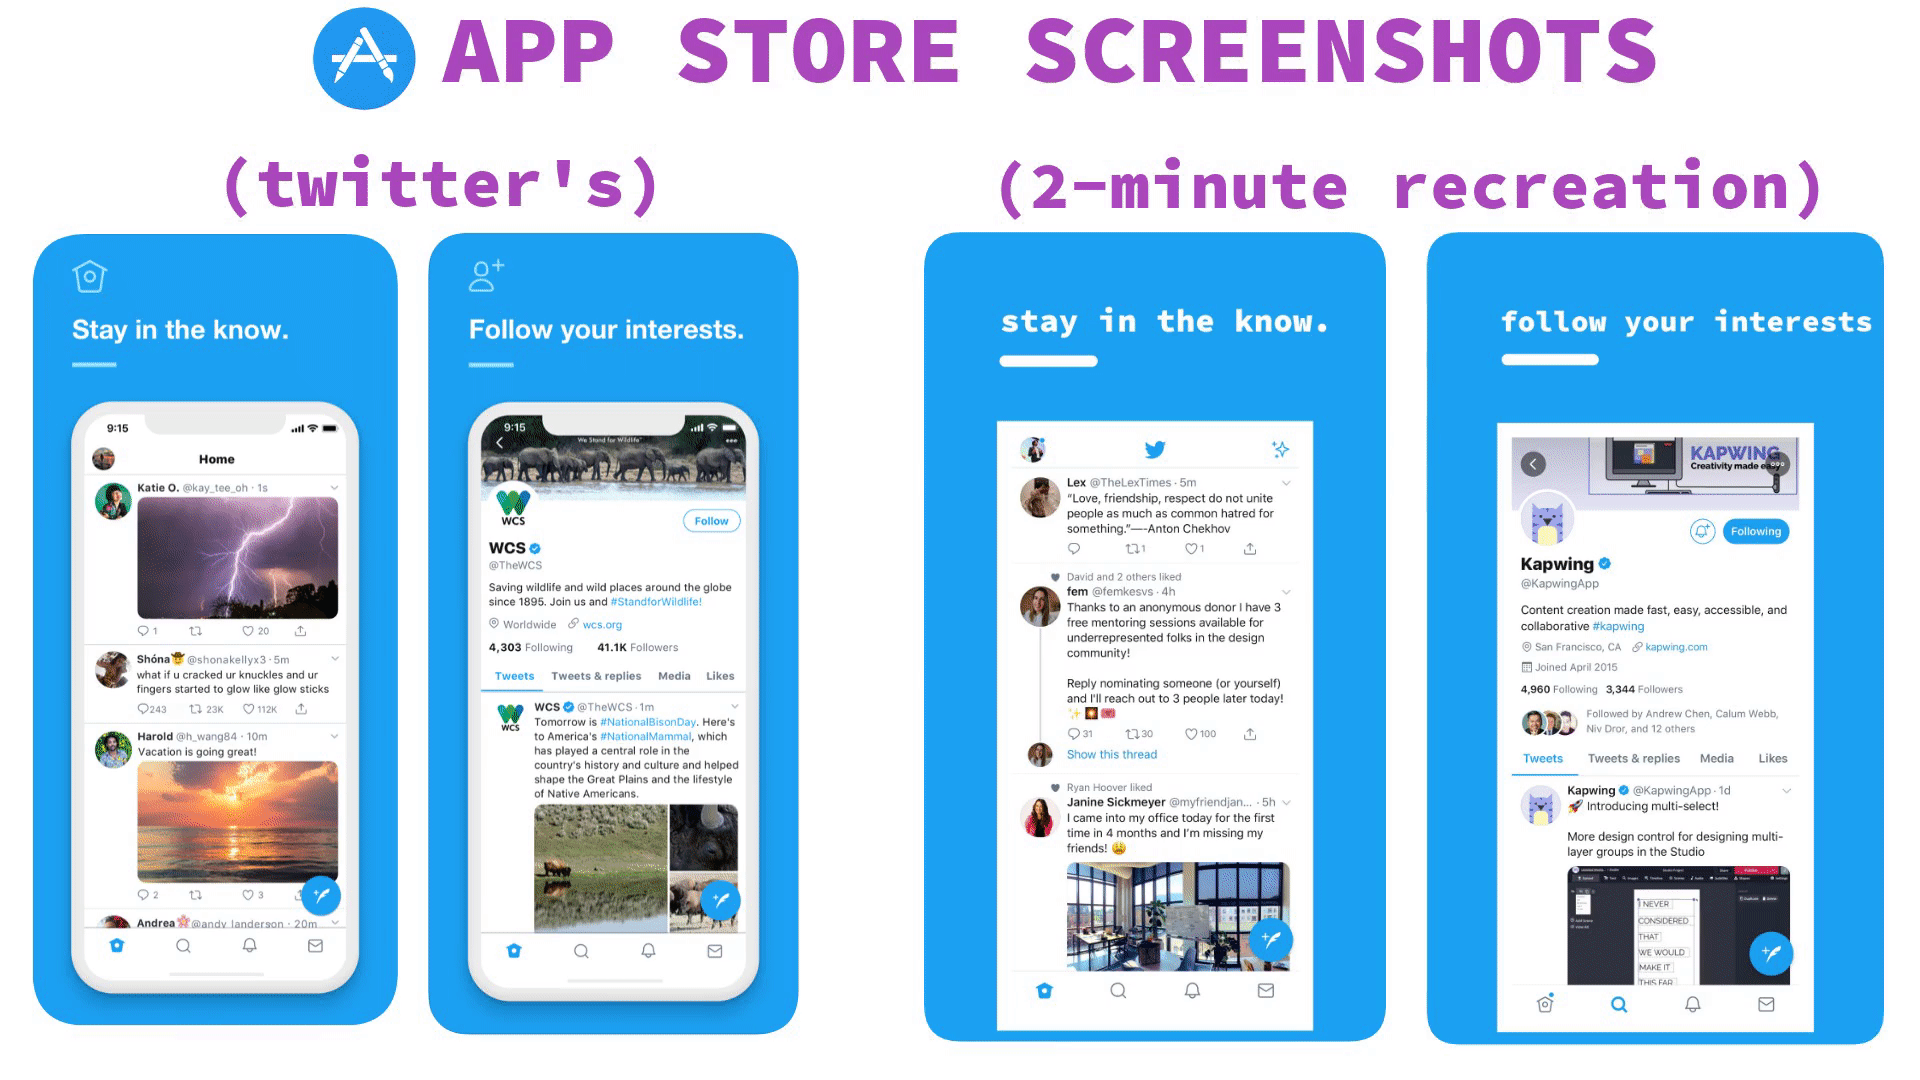 How to Make App Store Screenshots